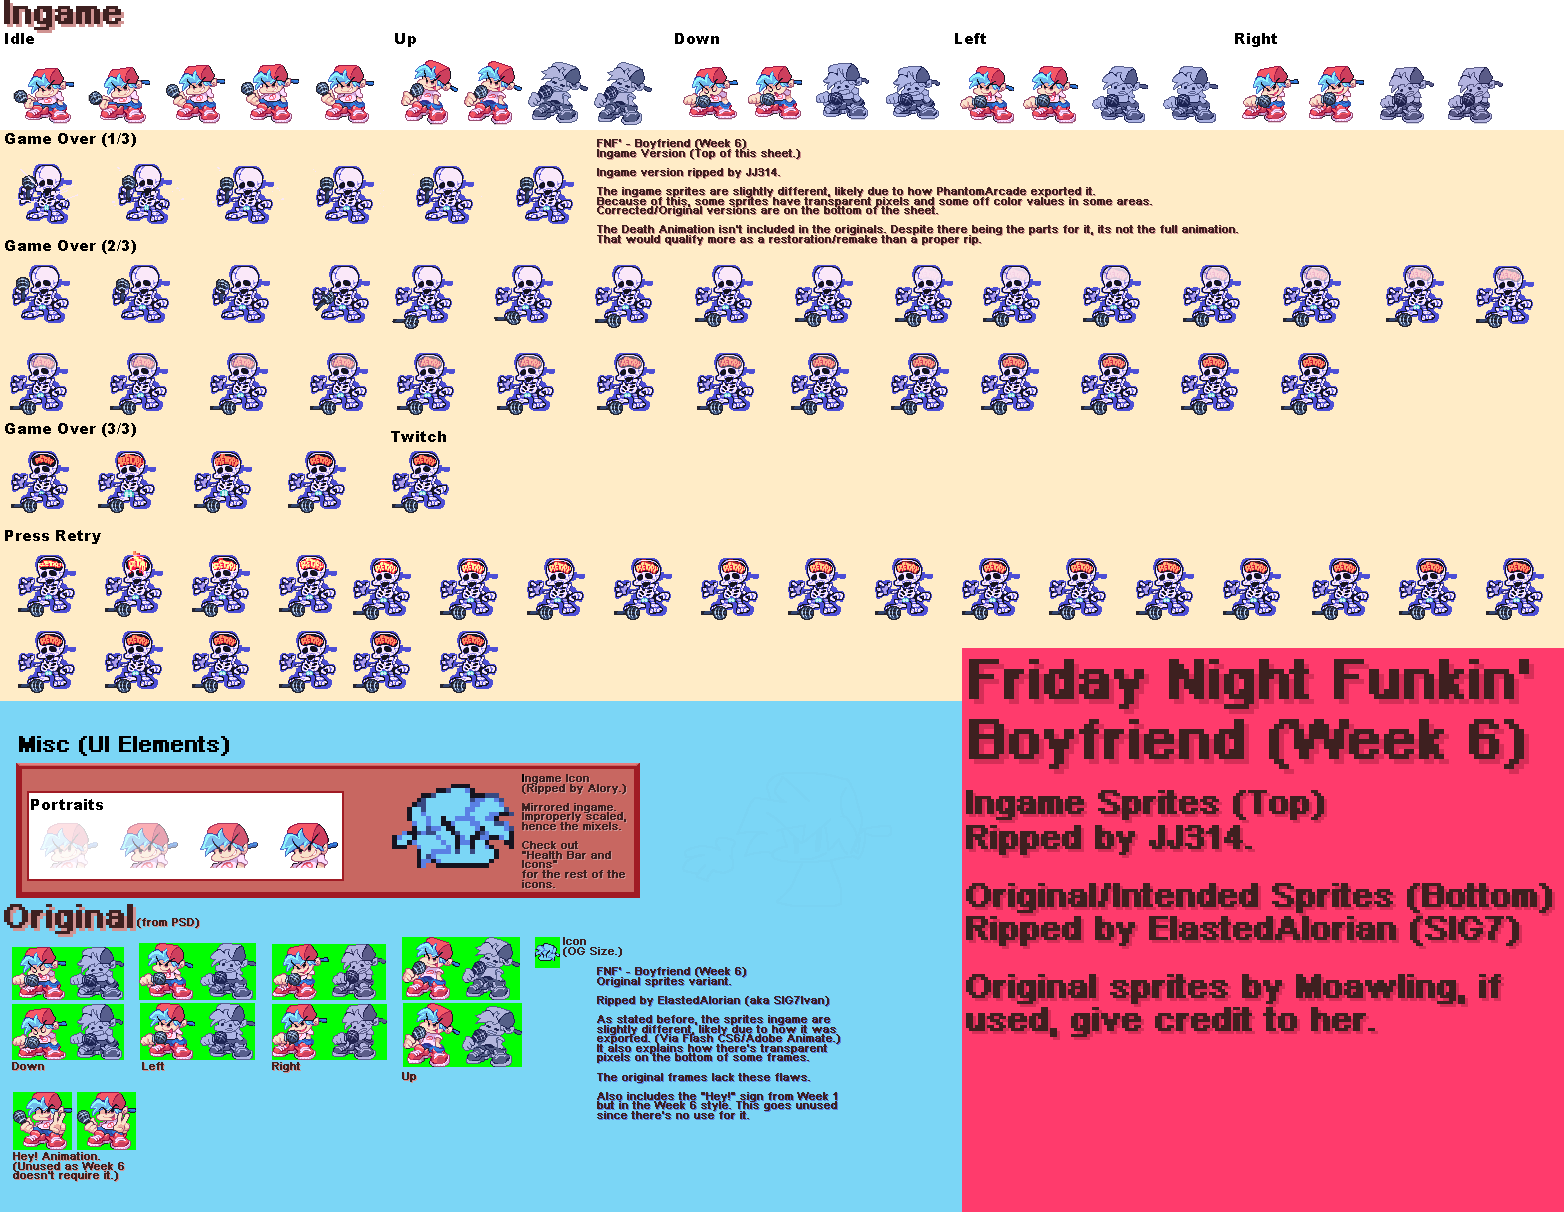 Boyfriend (Pixel)